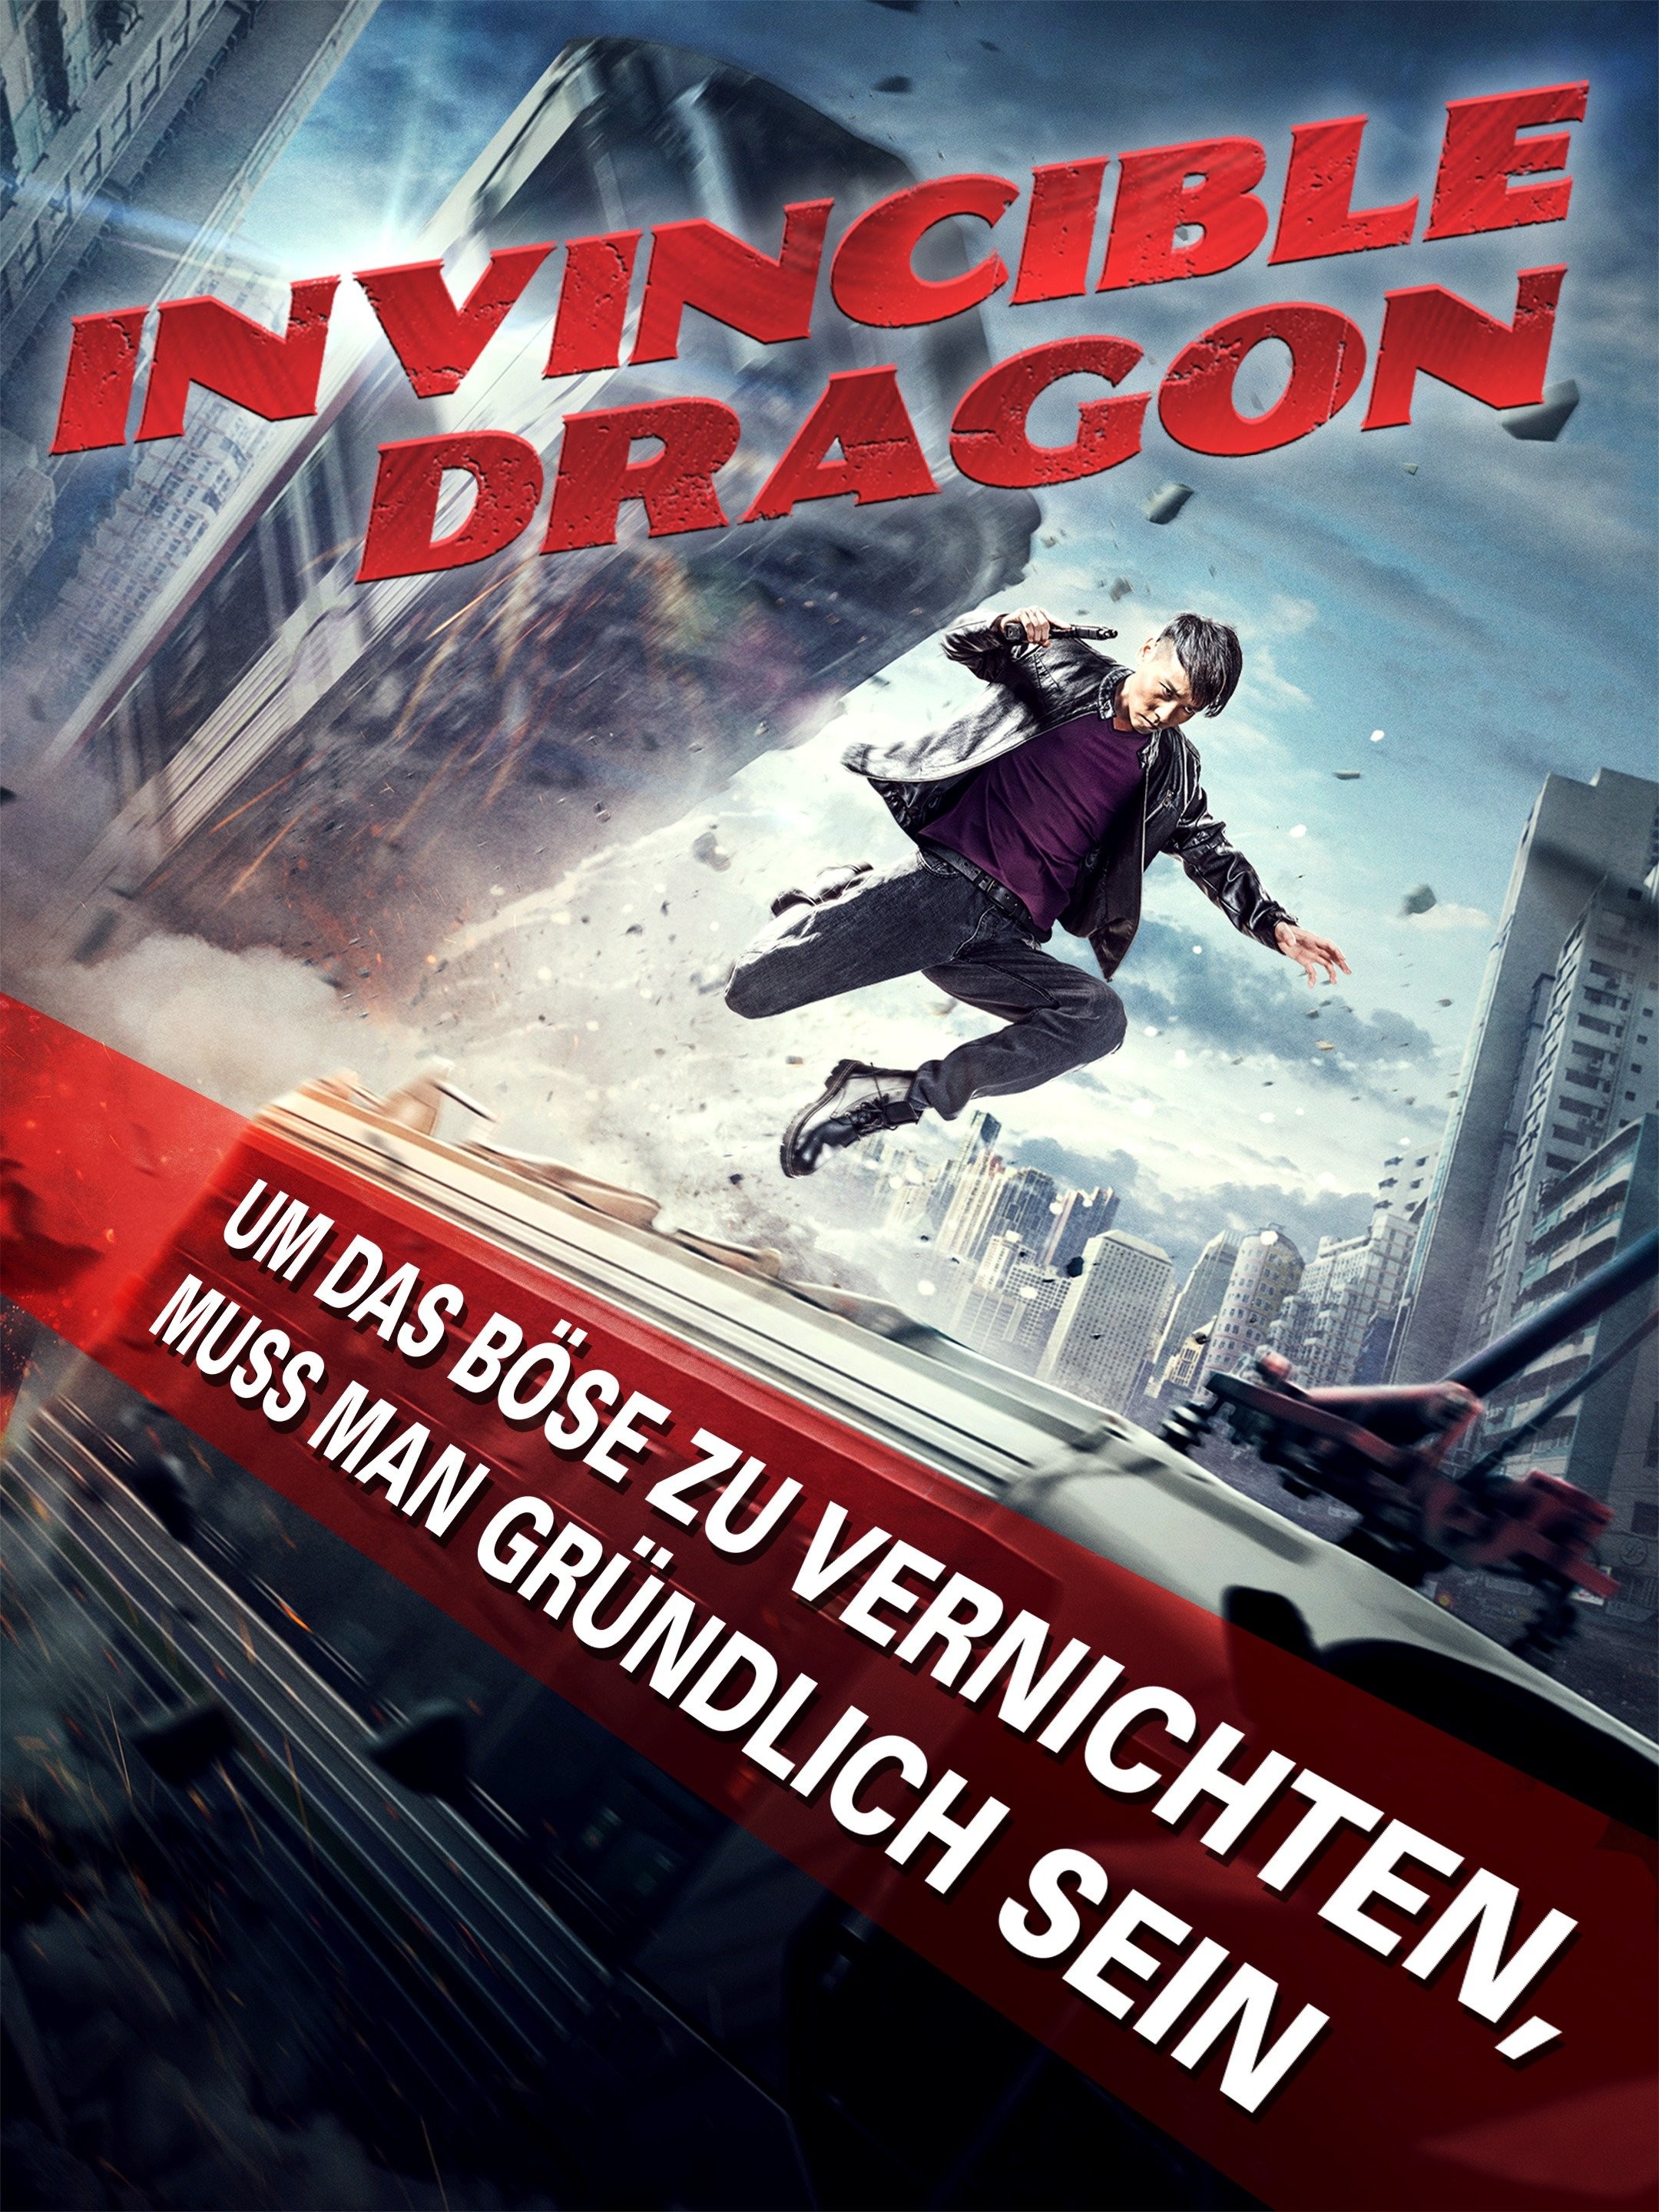 The Invincible Dragon (Film) - TV Tropes